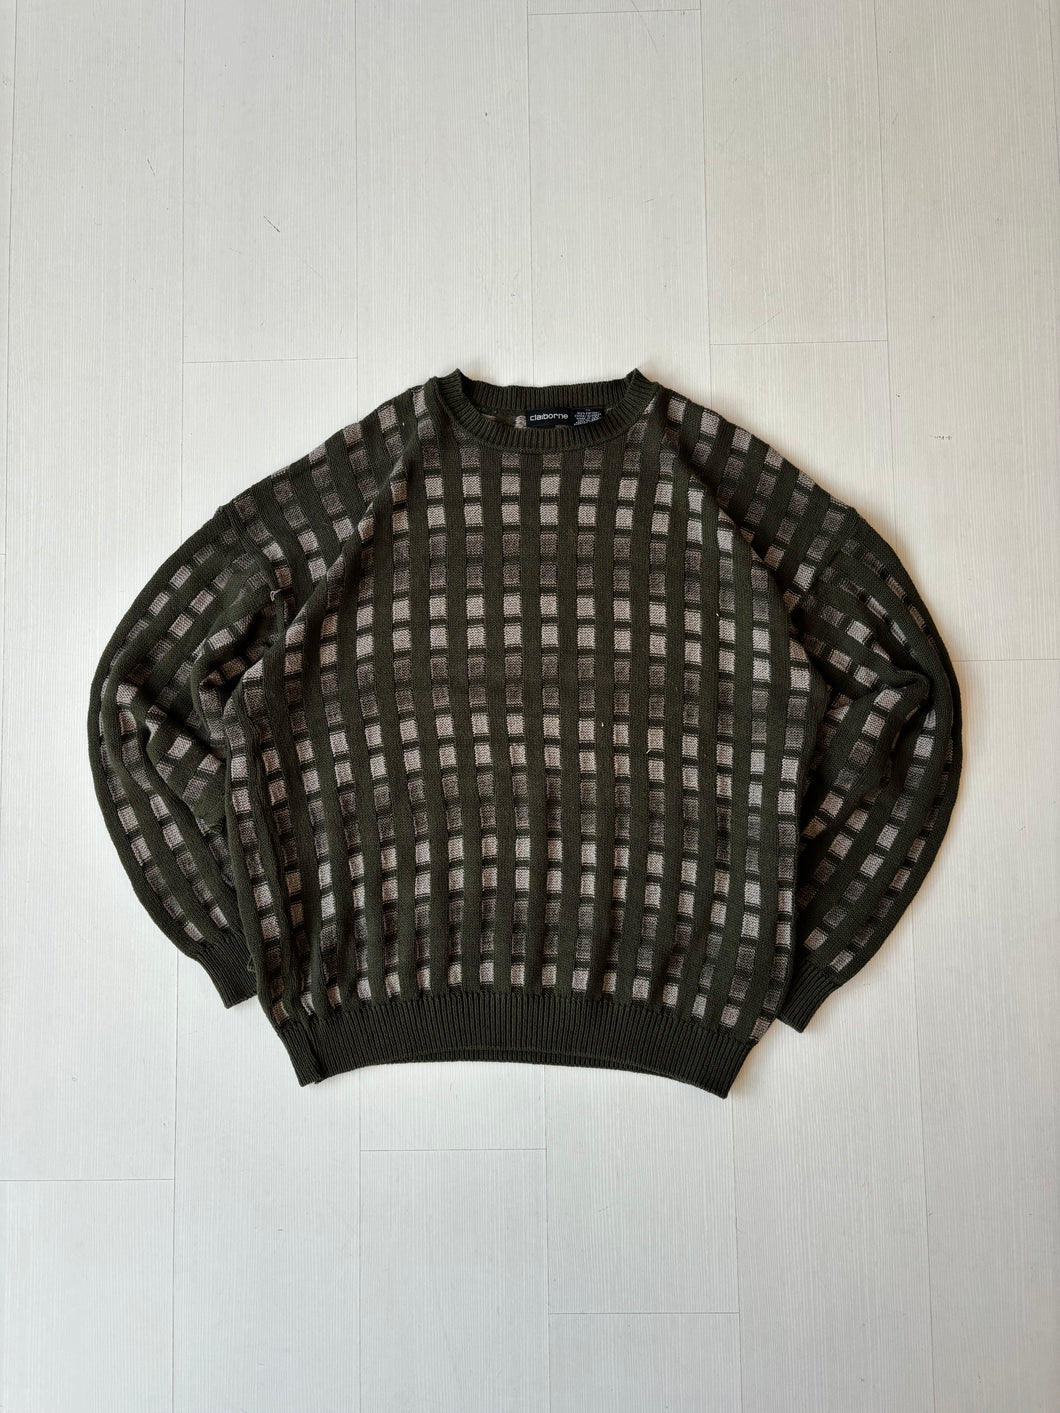 Vintage claiborne Sweater